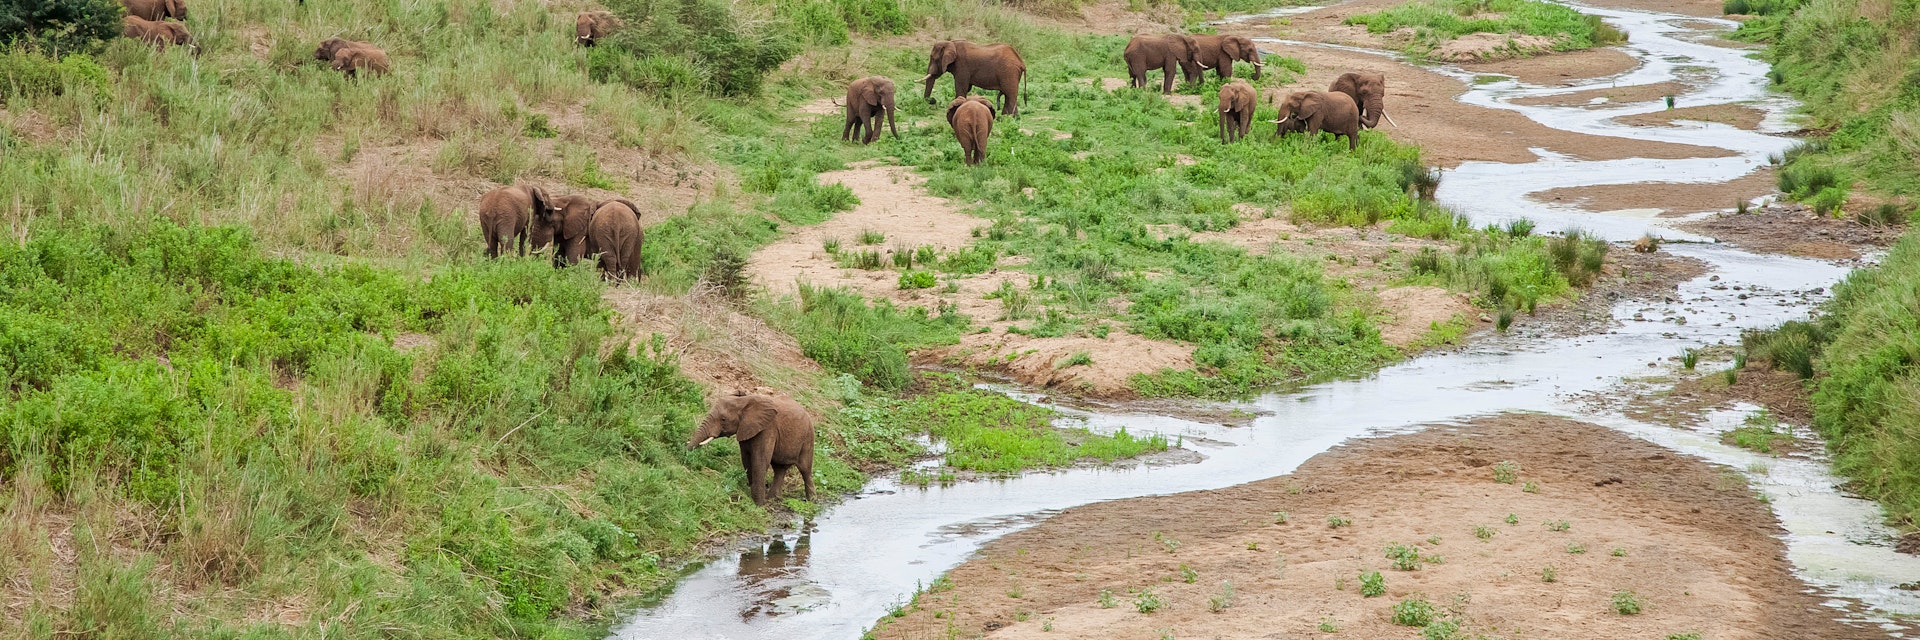 Elephants roam in uMkhuze Game Reserve.